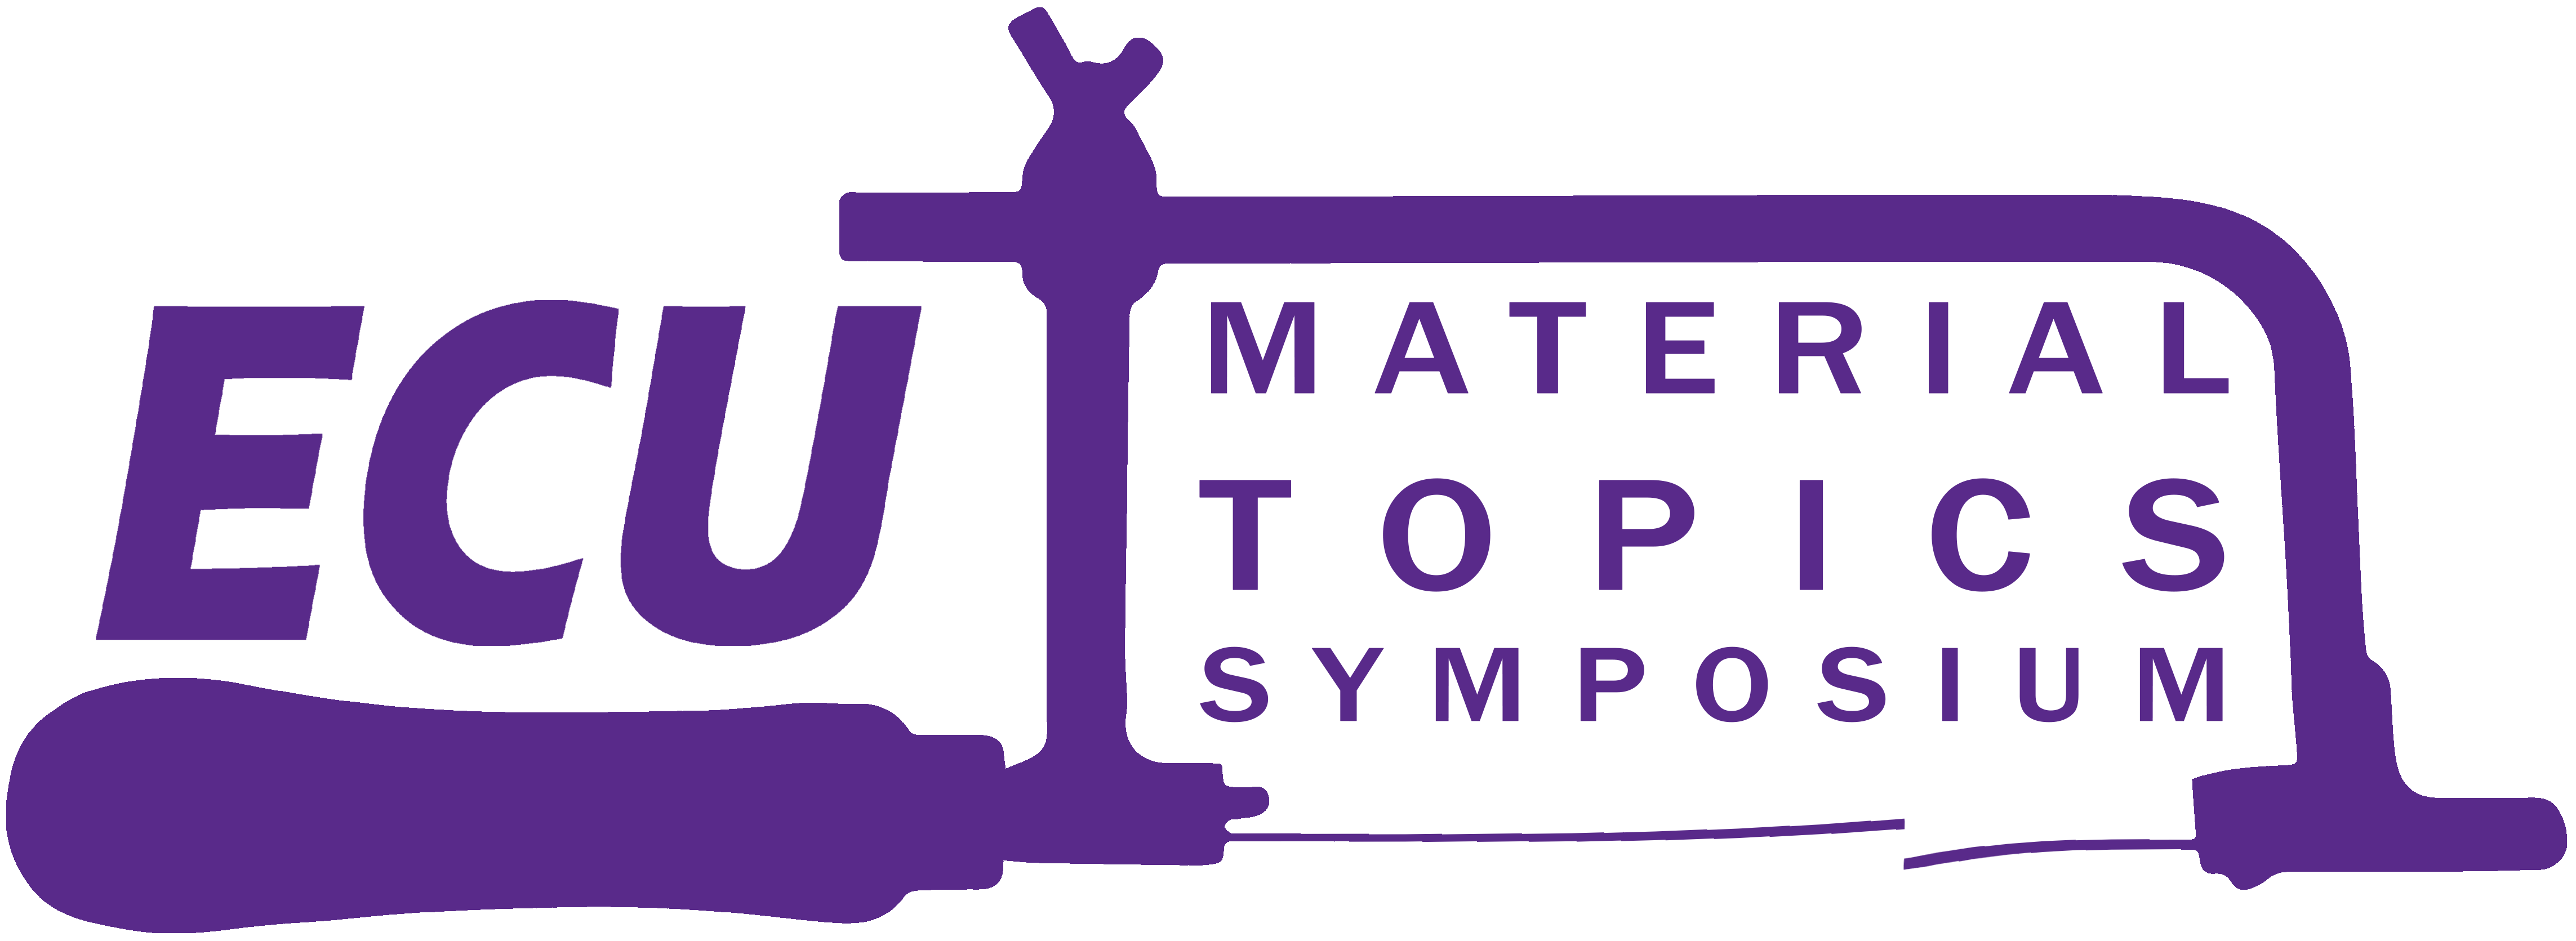 Material Topics Symposium at East Carolina University